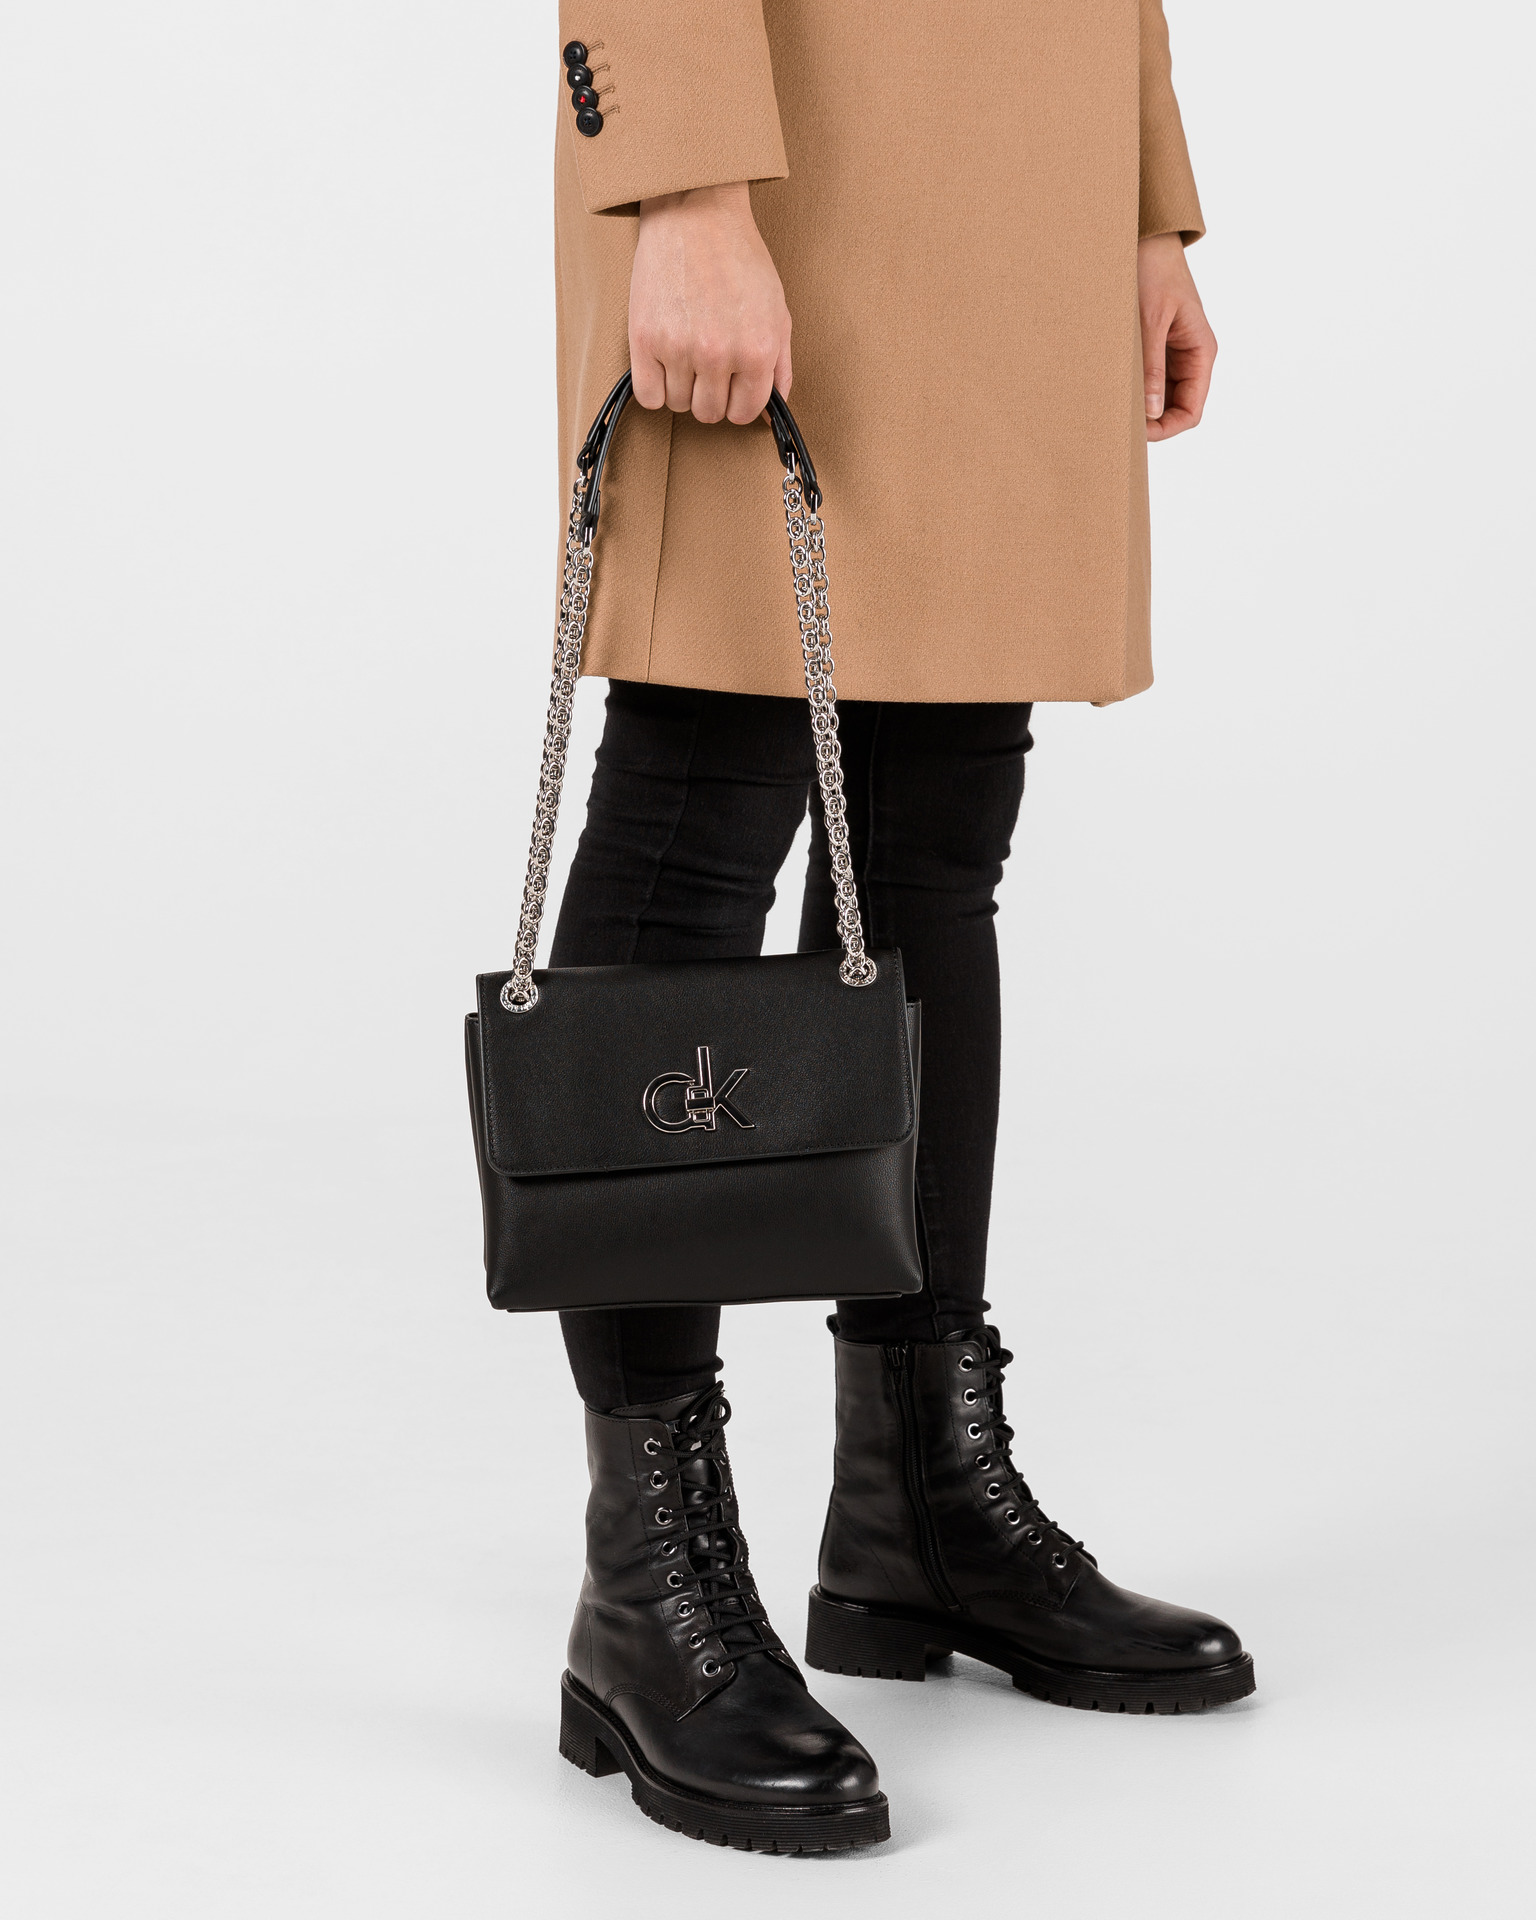 Calvin Klein Women's Crossbody Bag